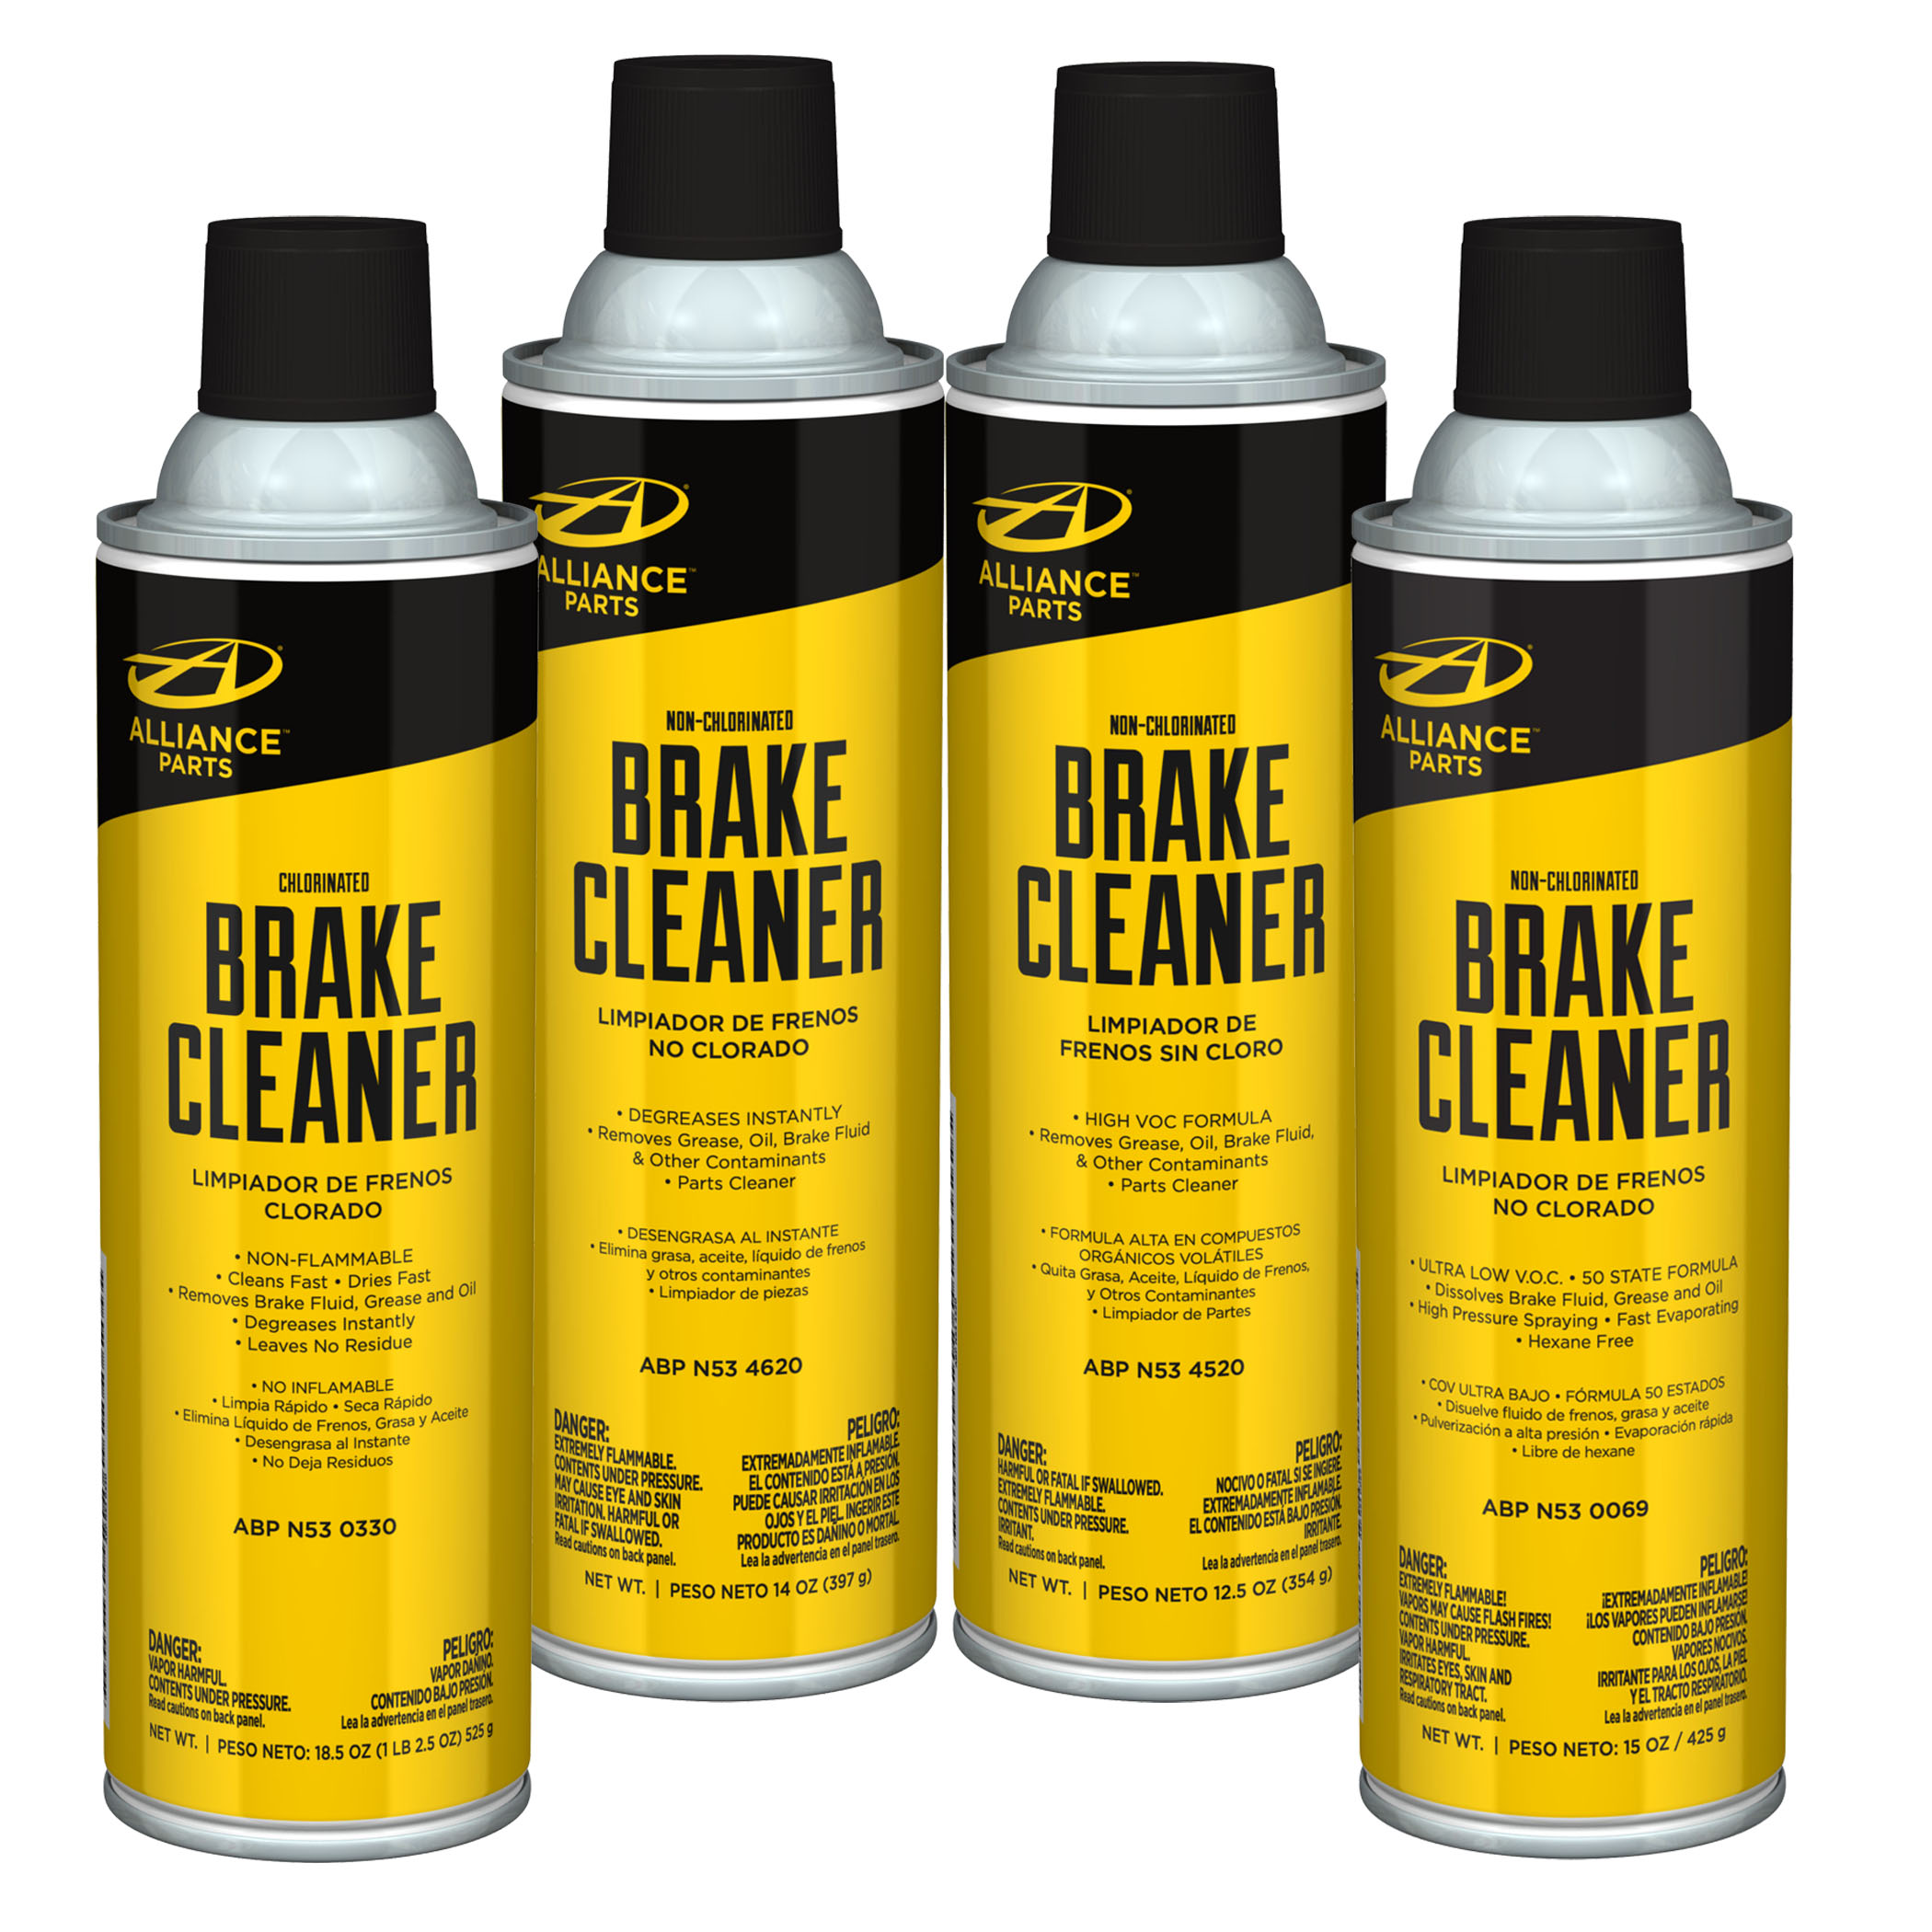 BRAKE KLEEN — 657 — Brake and Parts Cleaner